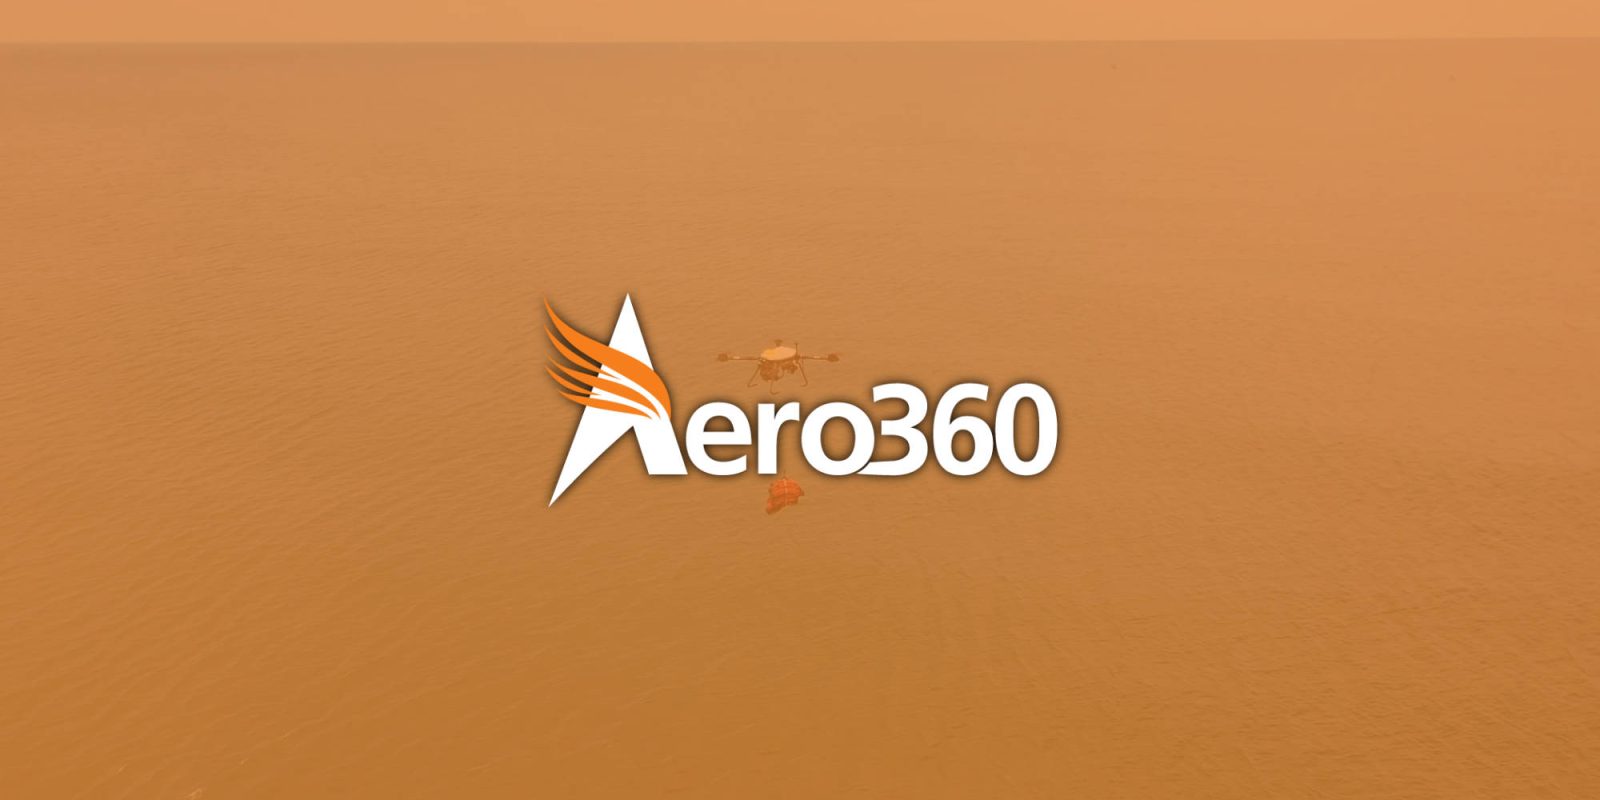 Aero360 tethered drones